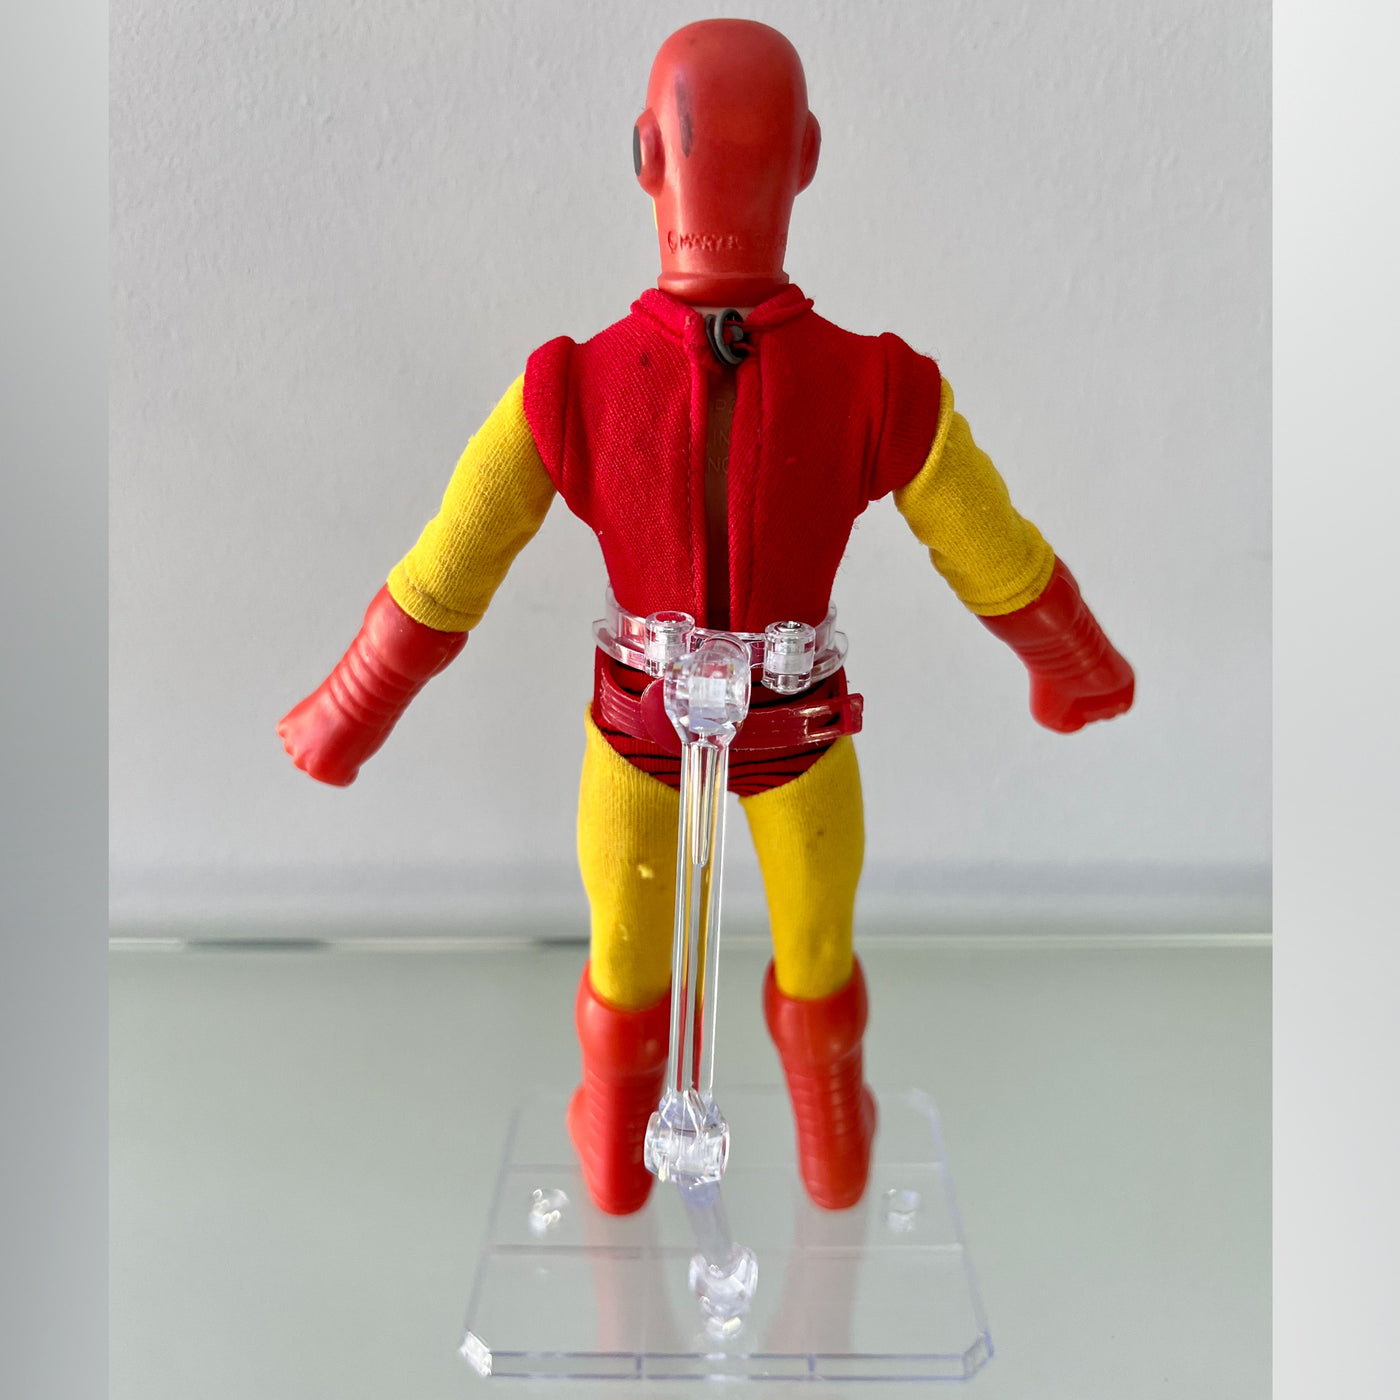 Rare Vintage 1970s Mego 8 Inch Iron Man Action Figure